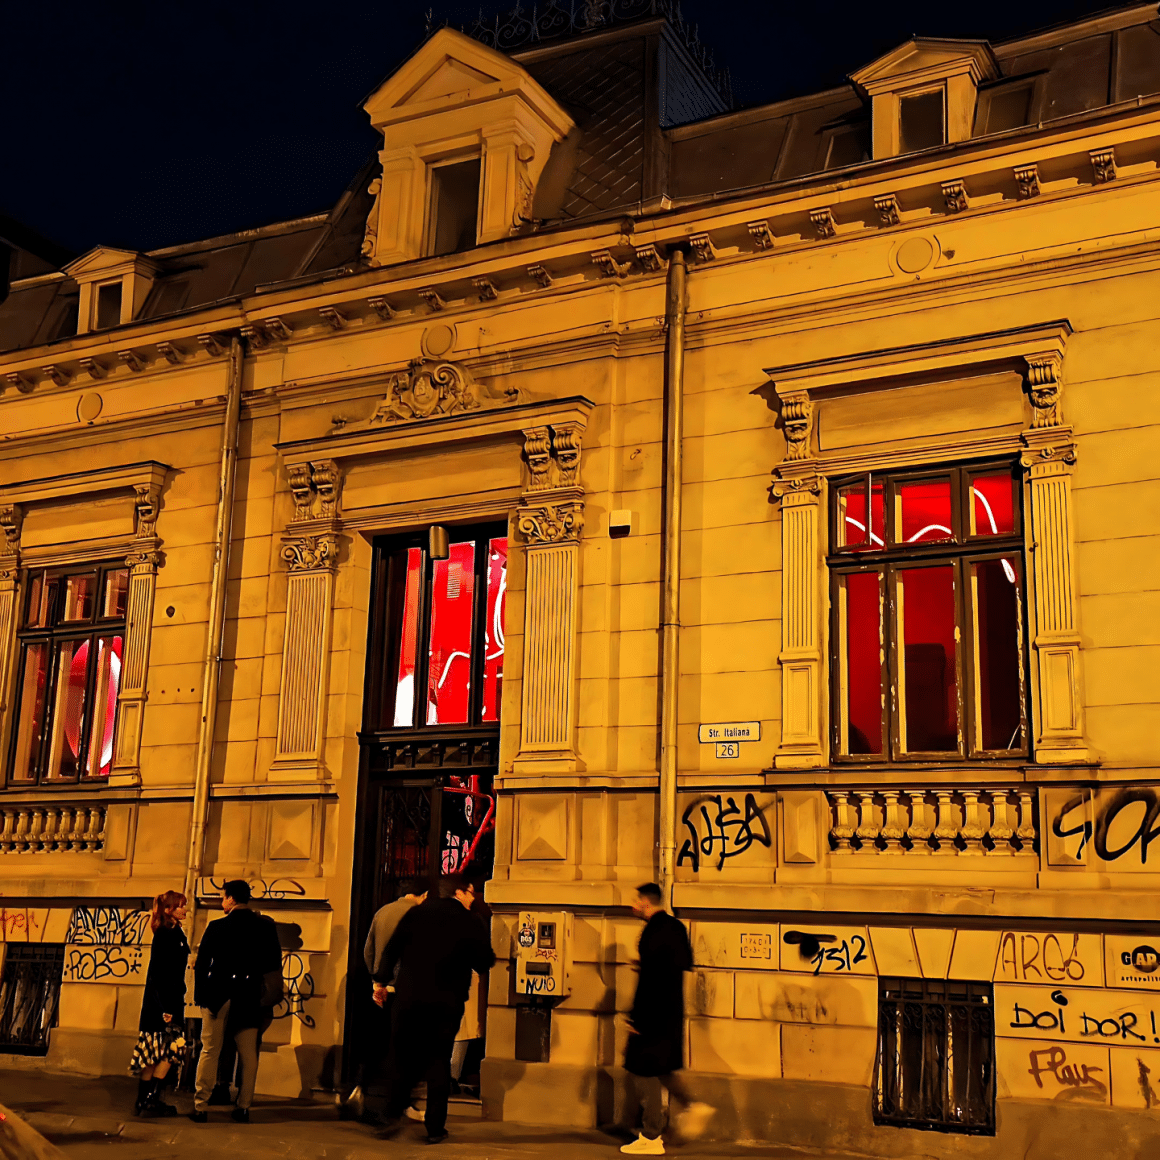 Casa veche, in stil interbelic, forografiata seara, din exterior. Teoria Bar. Locuri noi București